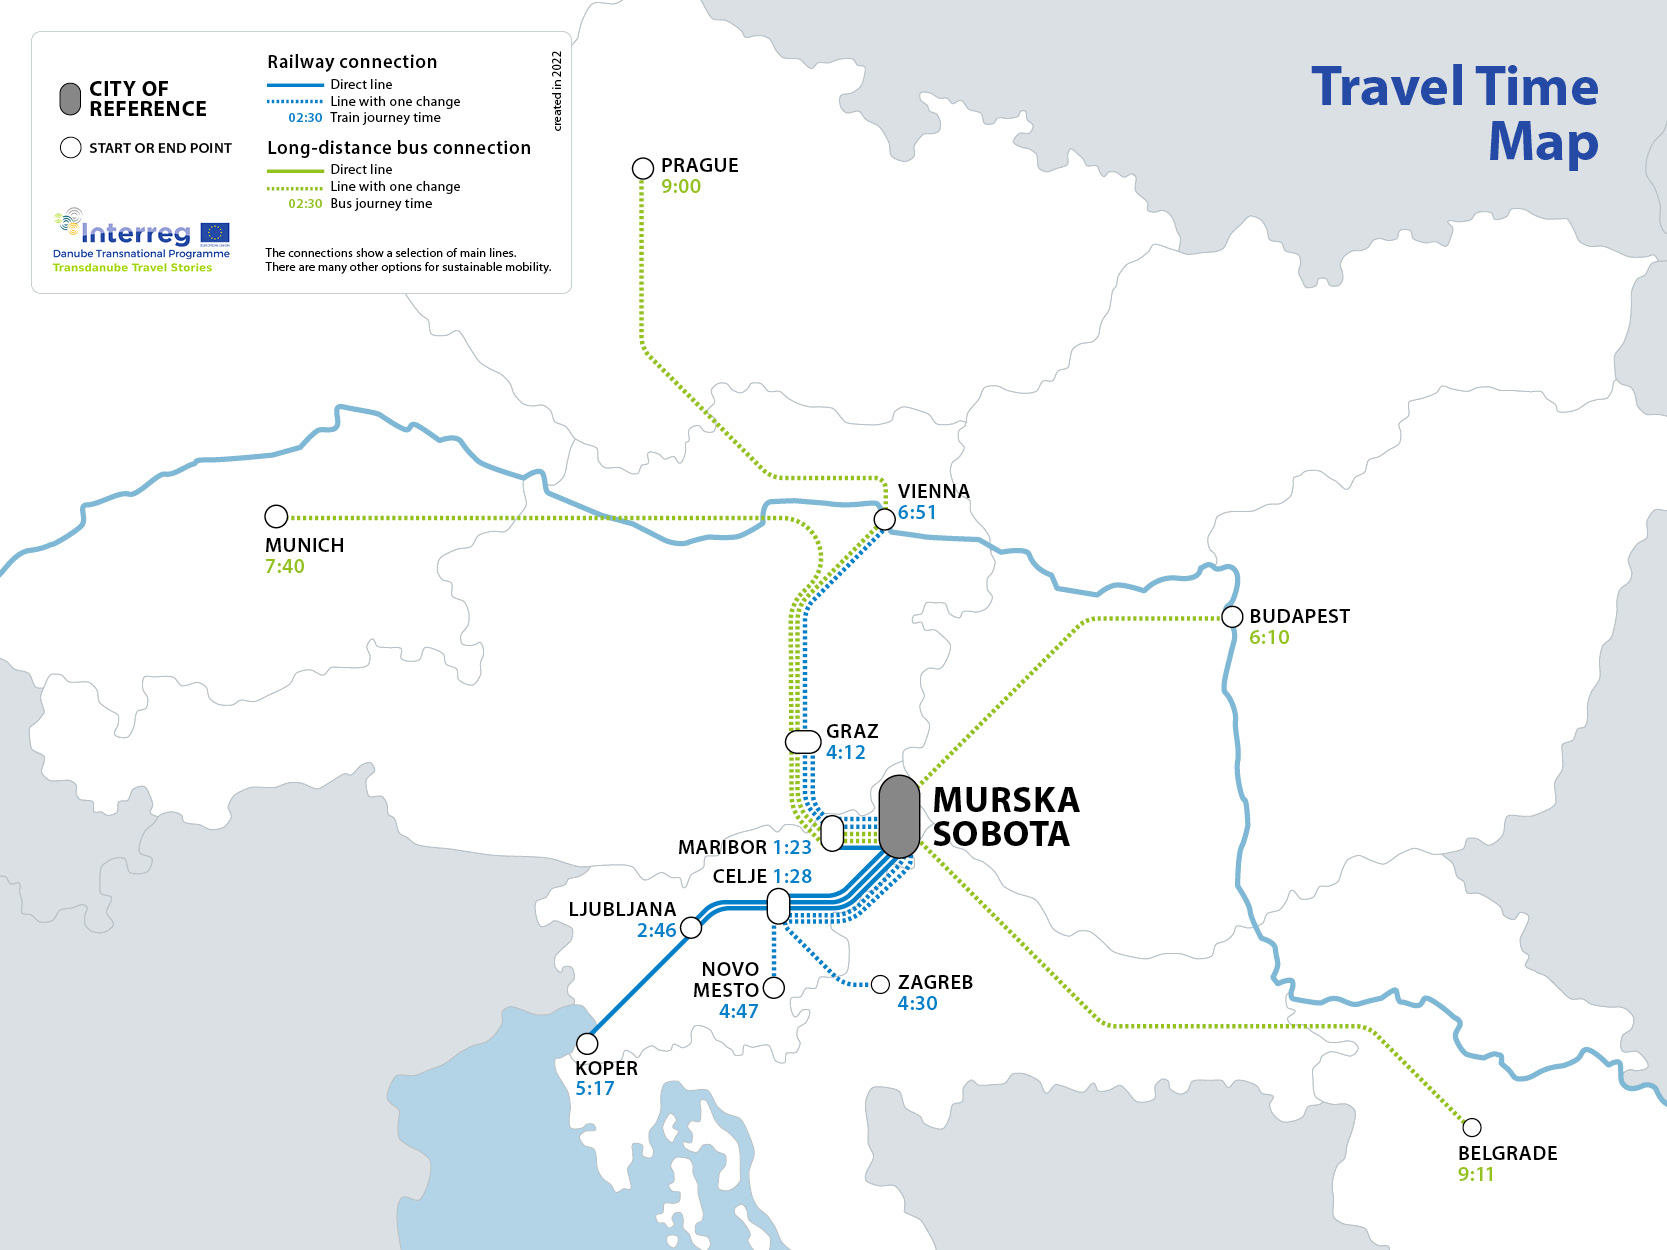 Travel Time Map - Murska Sobota (enlarge image)